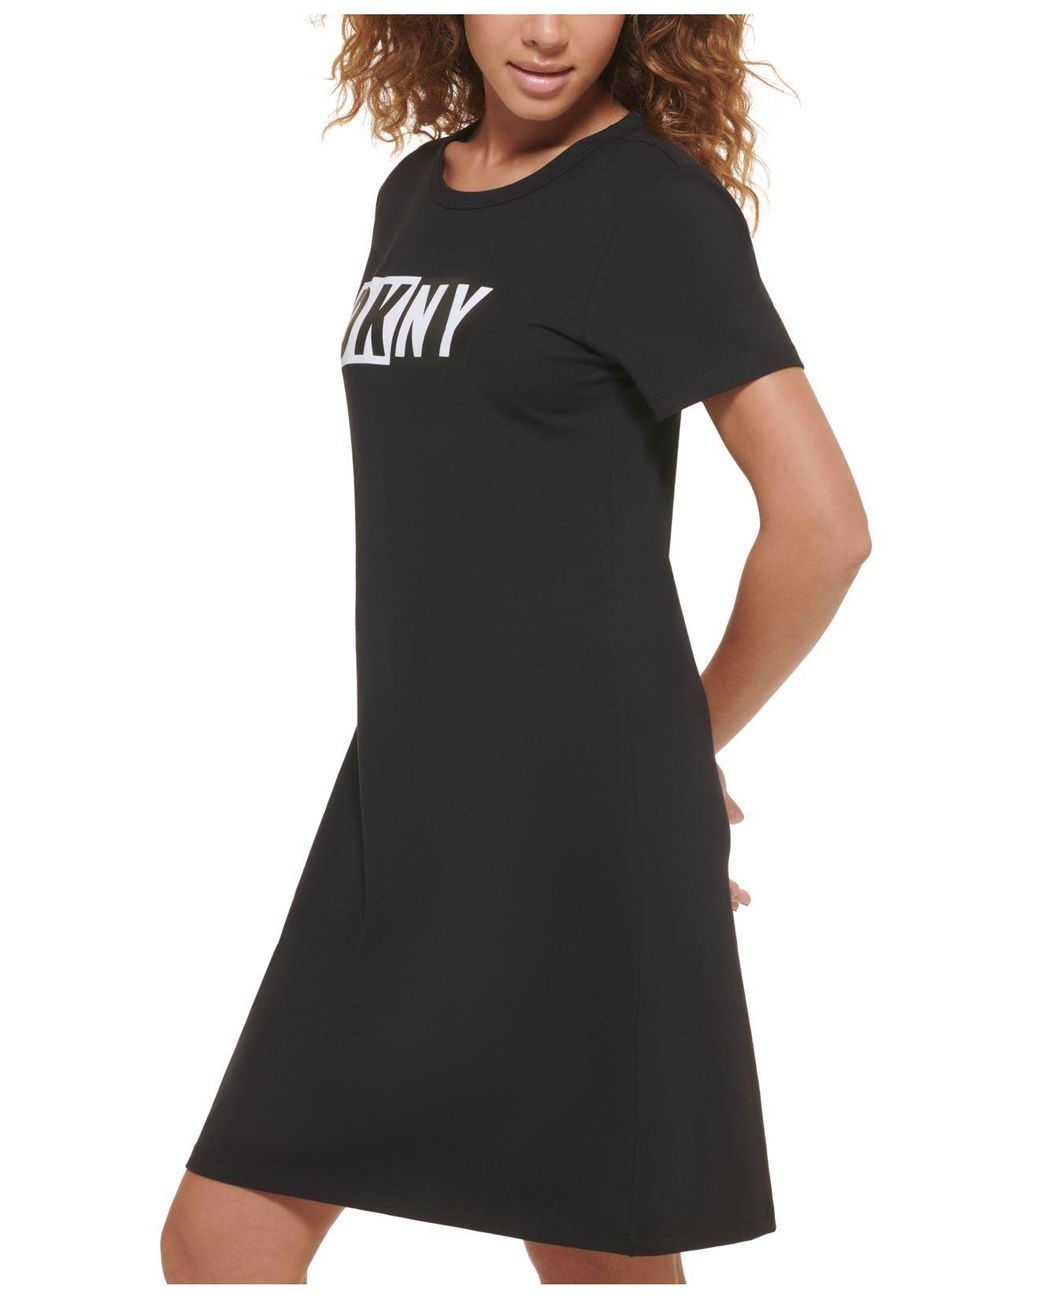 Dkny By Donna Karan Sport Solid Crewneck Tee Shirt Dress, Dresses, Clothing & Accessories